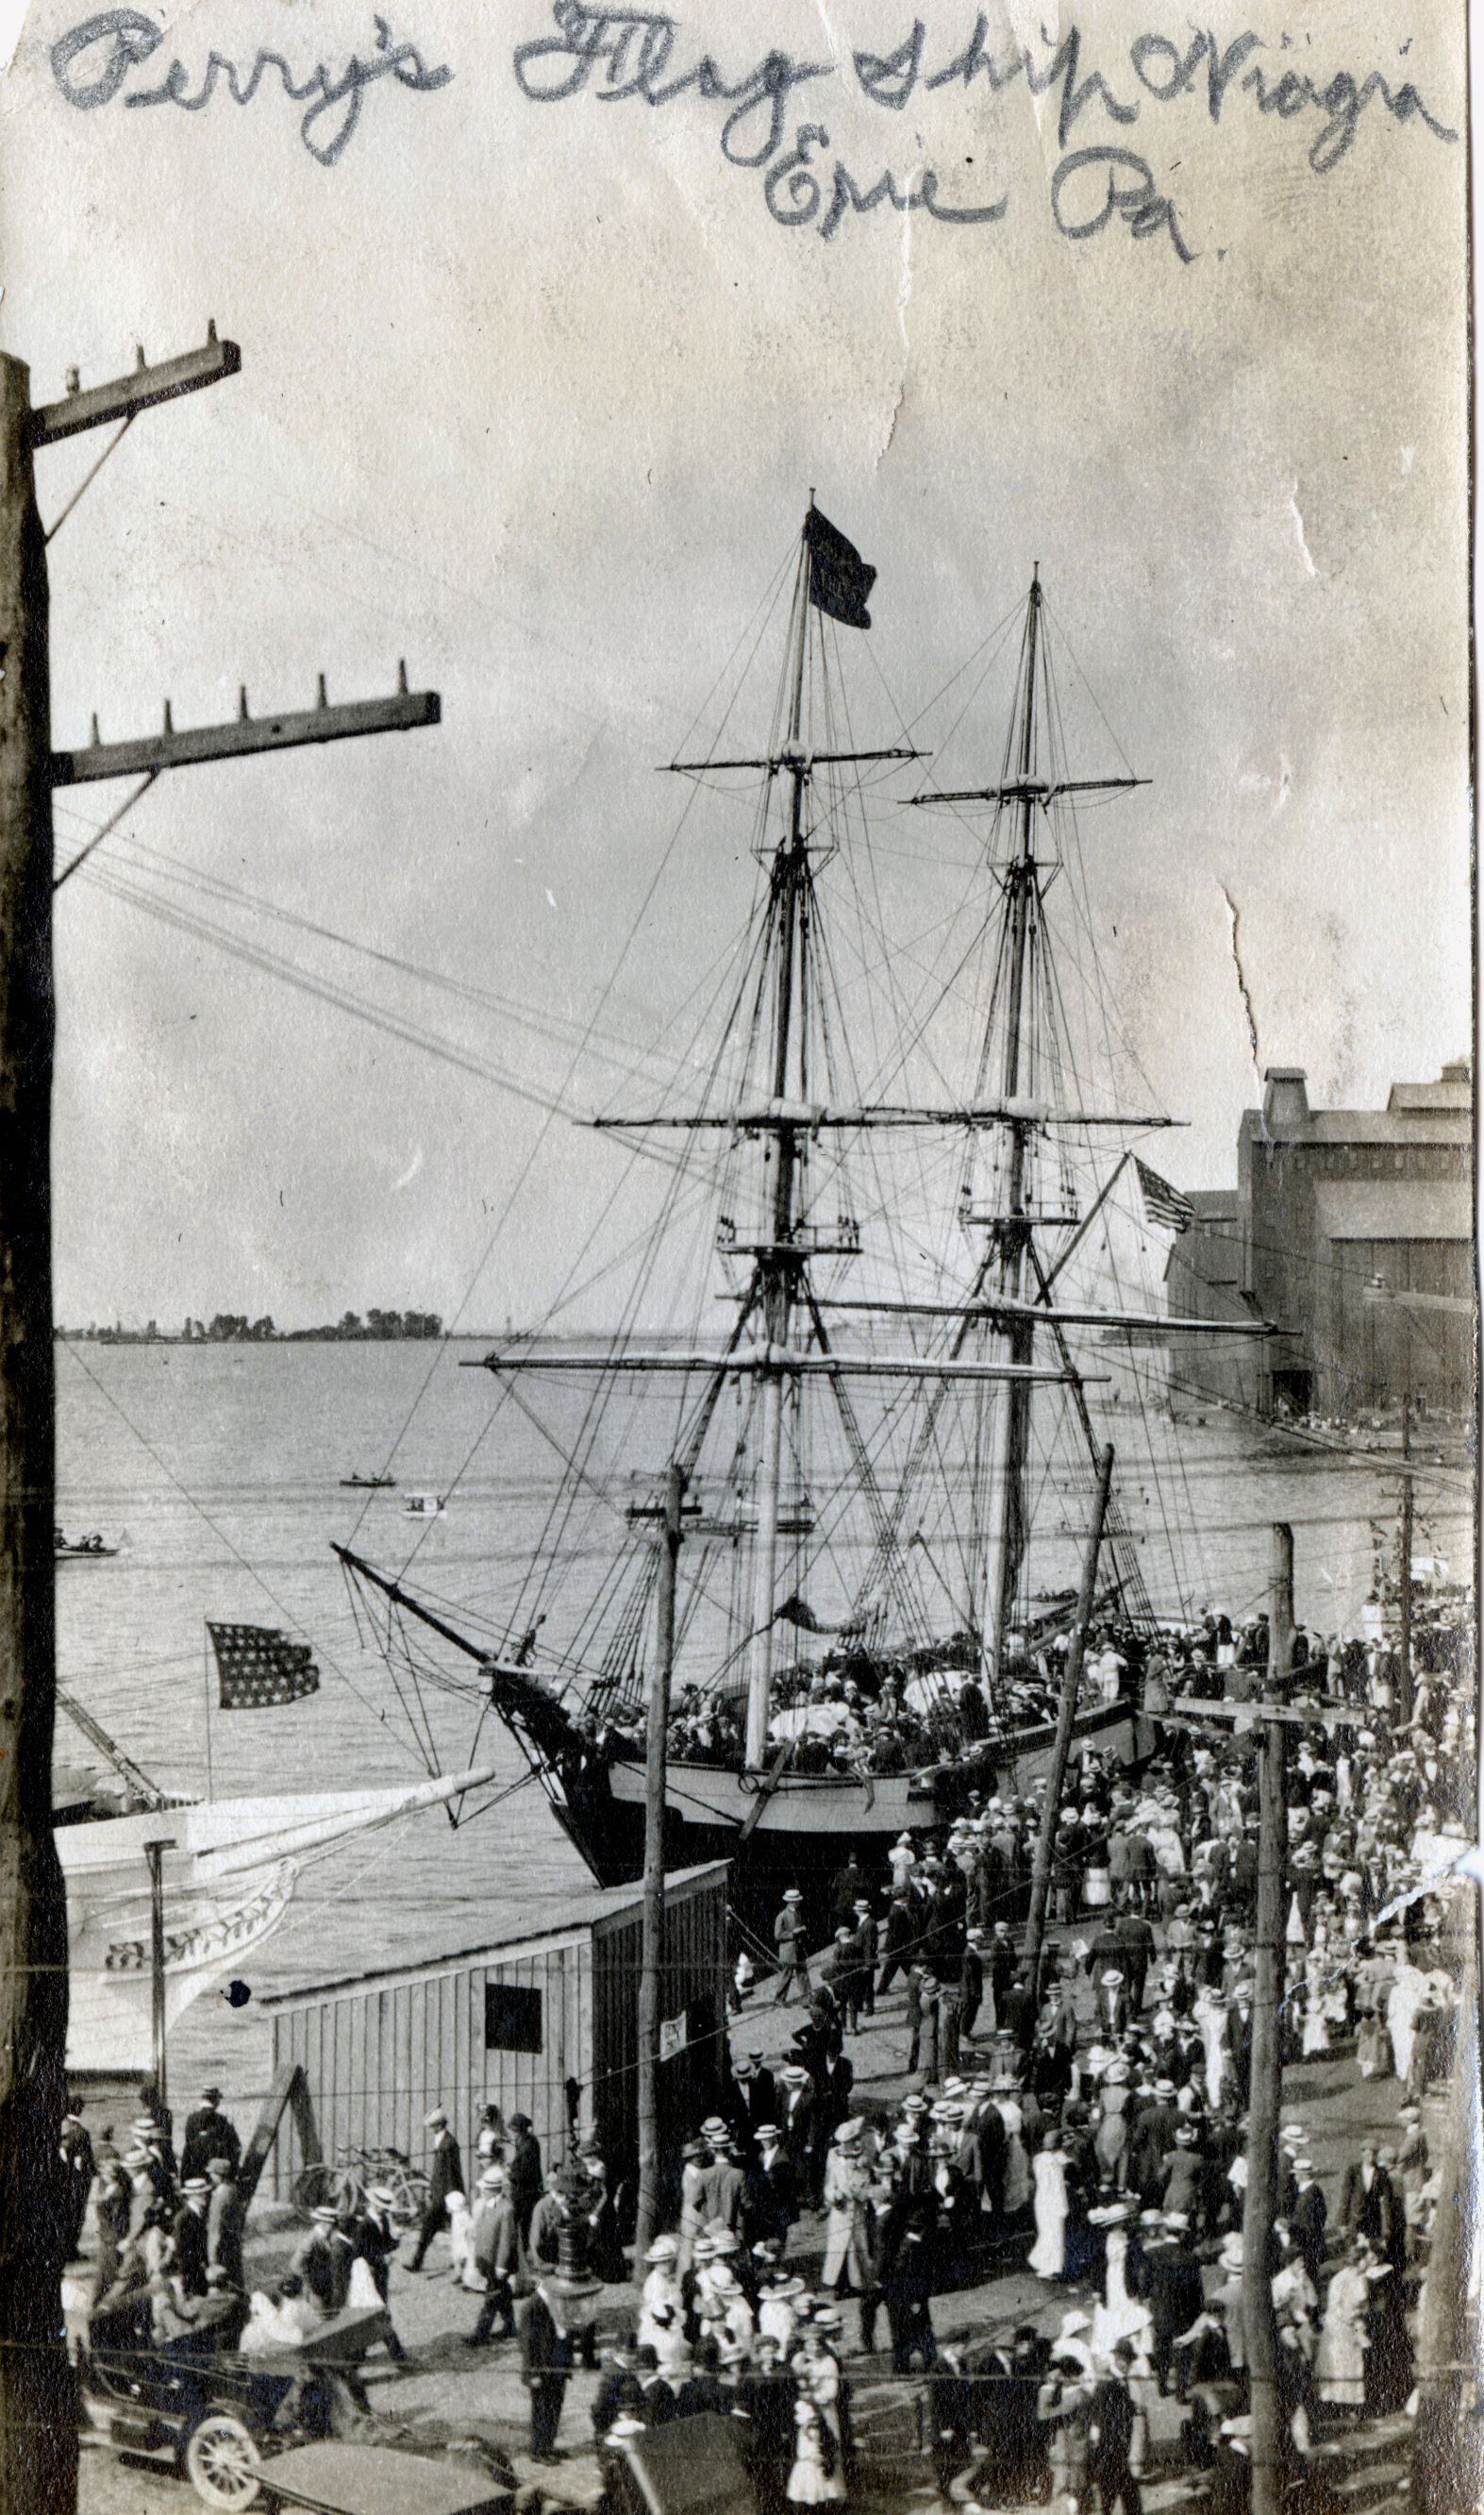 Niagara at Dock w crowds 1913